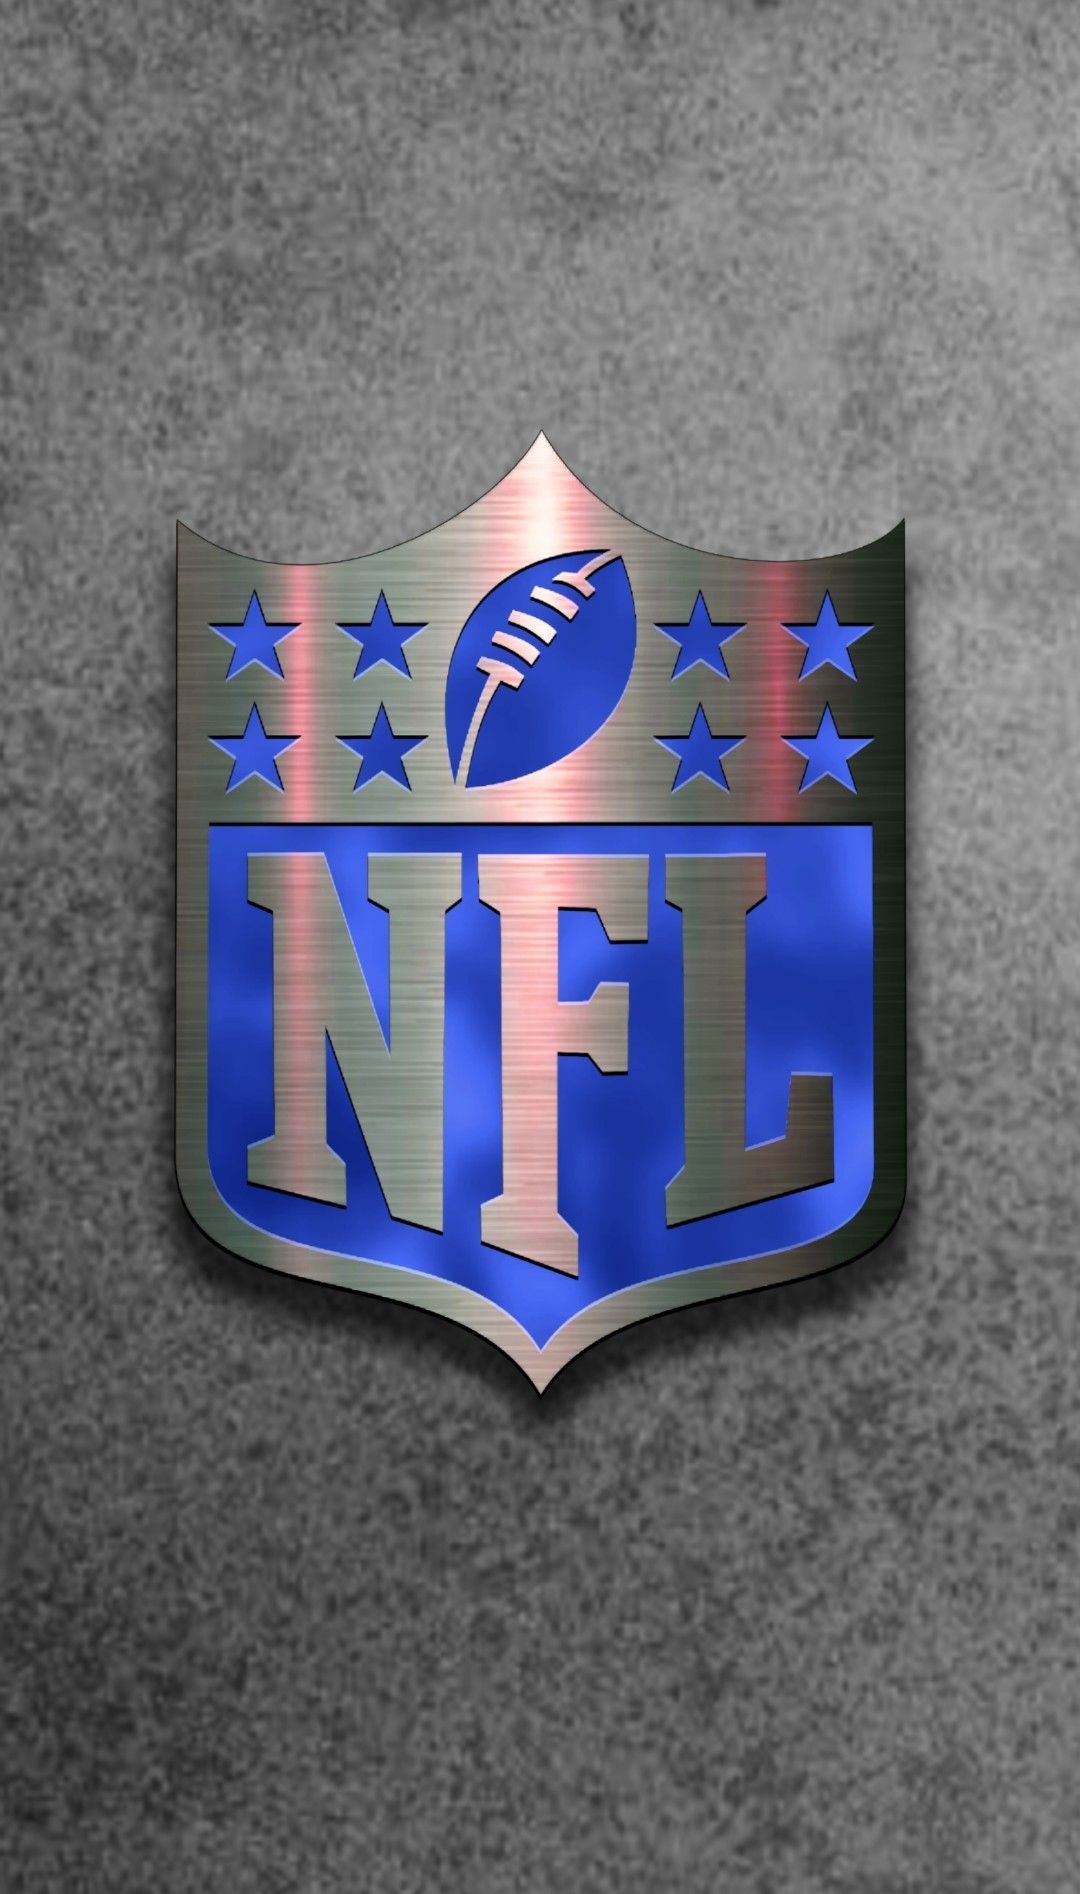 NFL logo wallpaper ( Metal ). Nfl logo, Nfl teams logos, All nfl